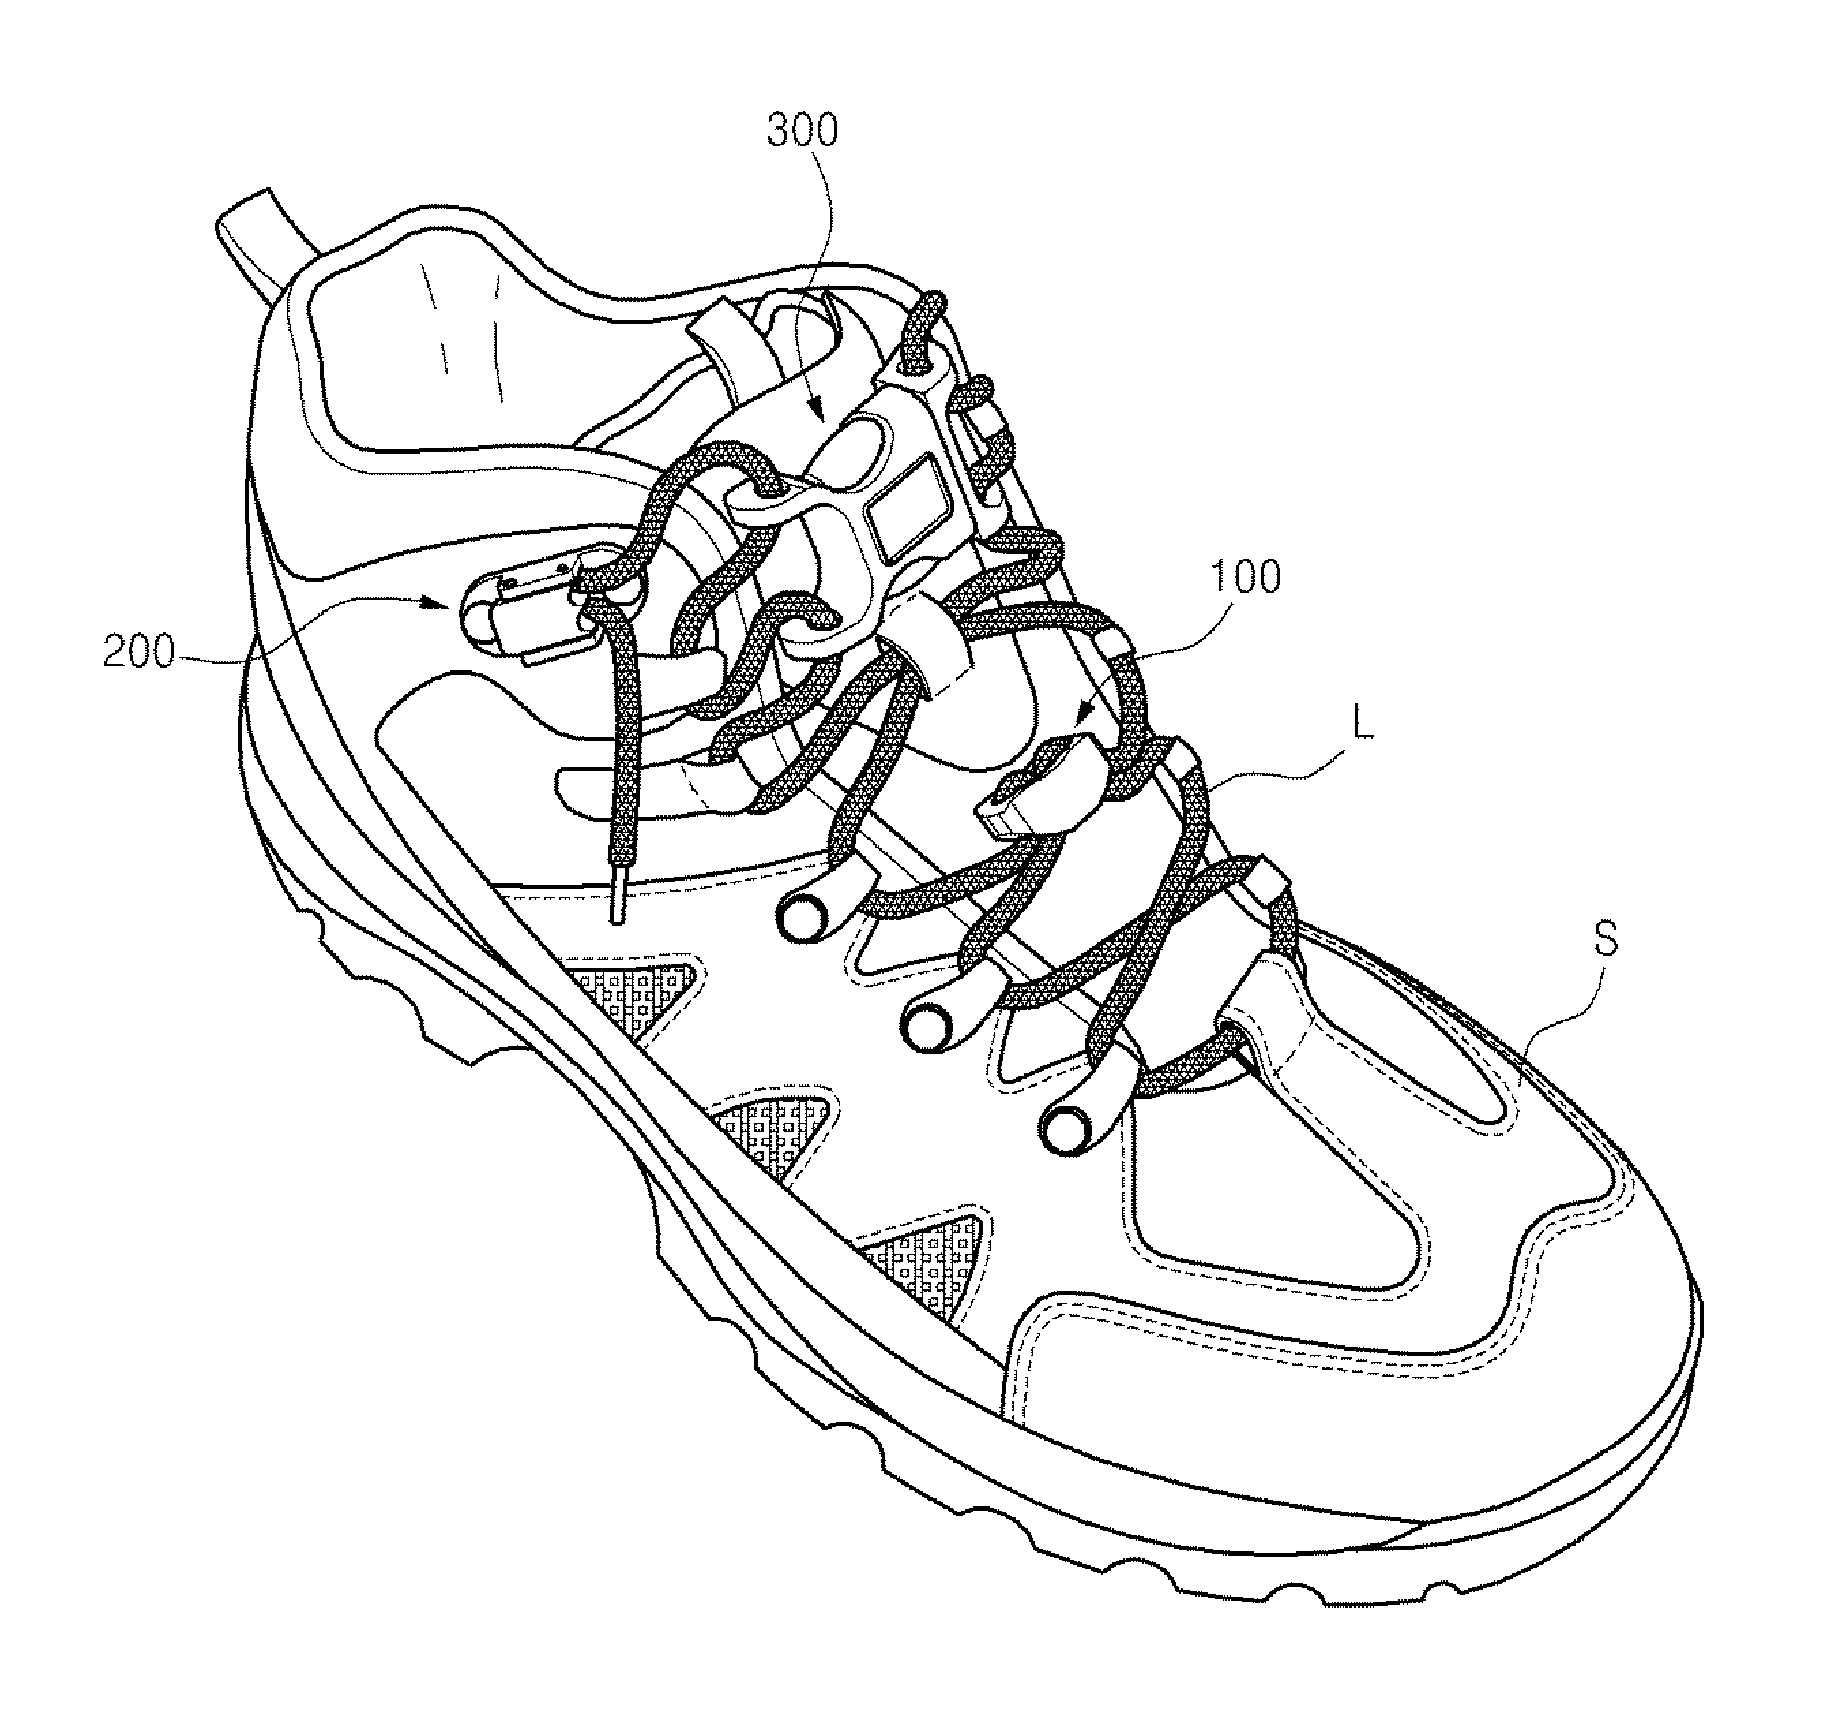 Shoelace binding device